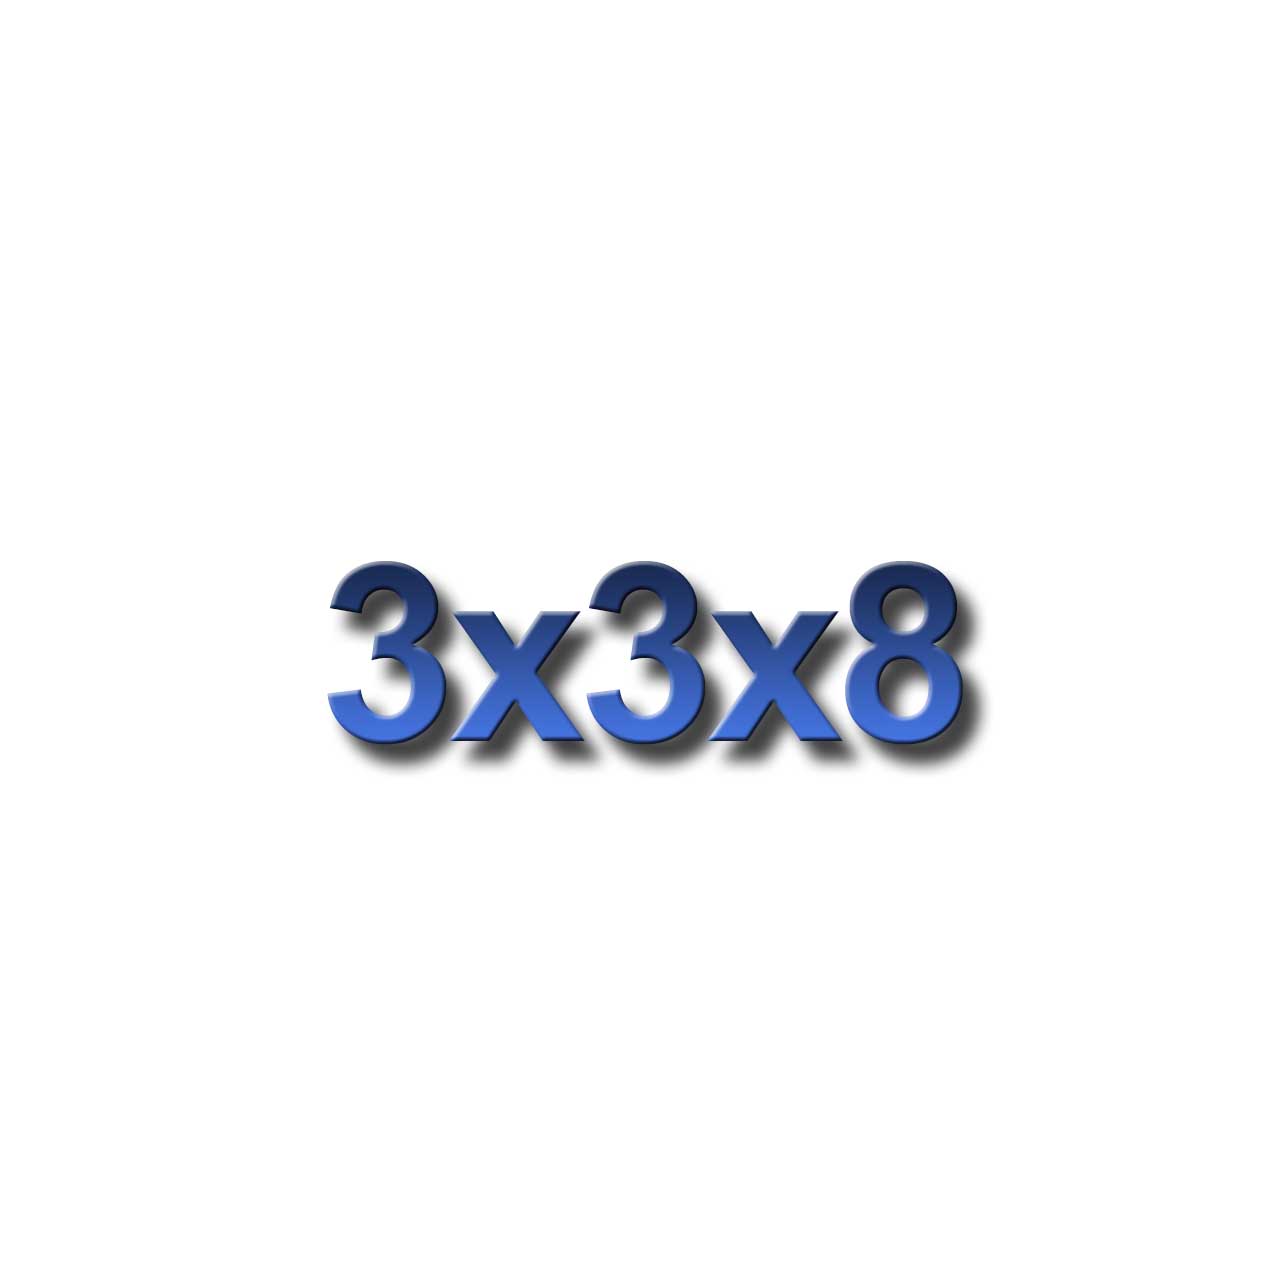 3x3x8